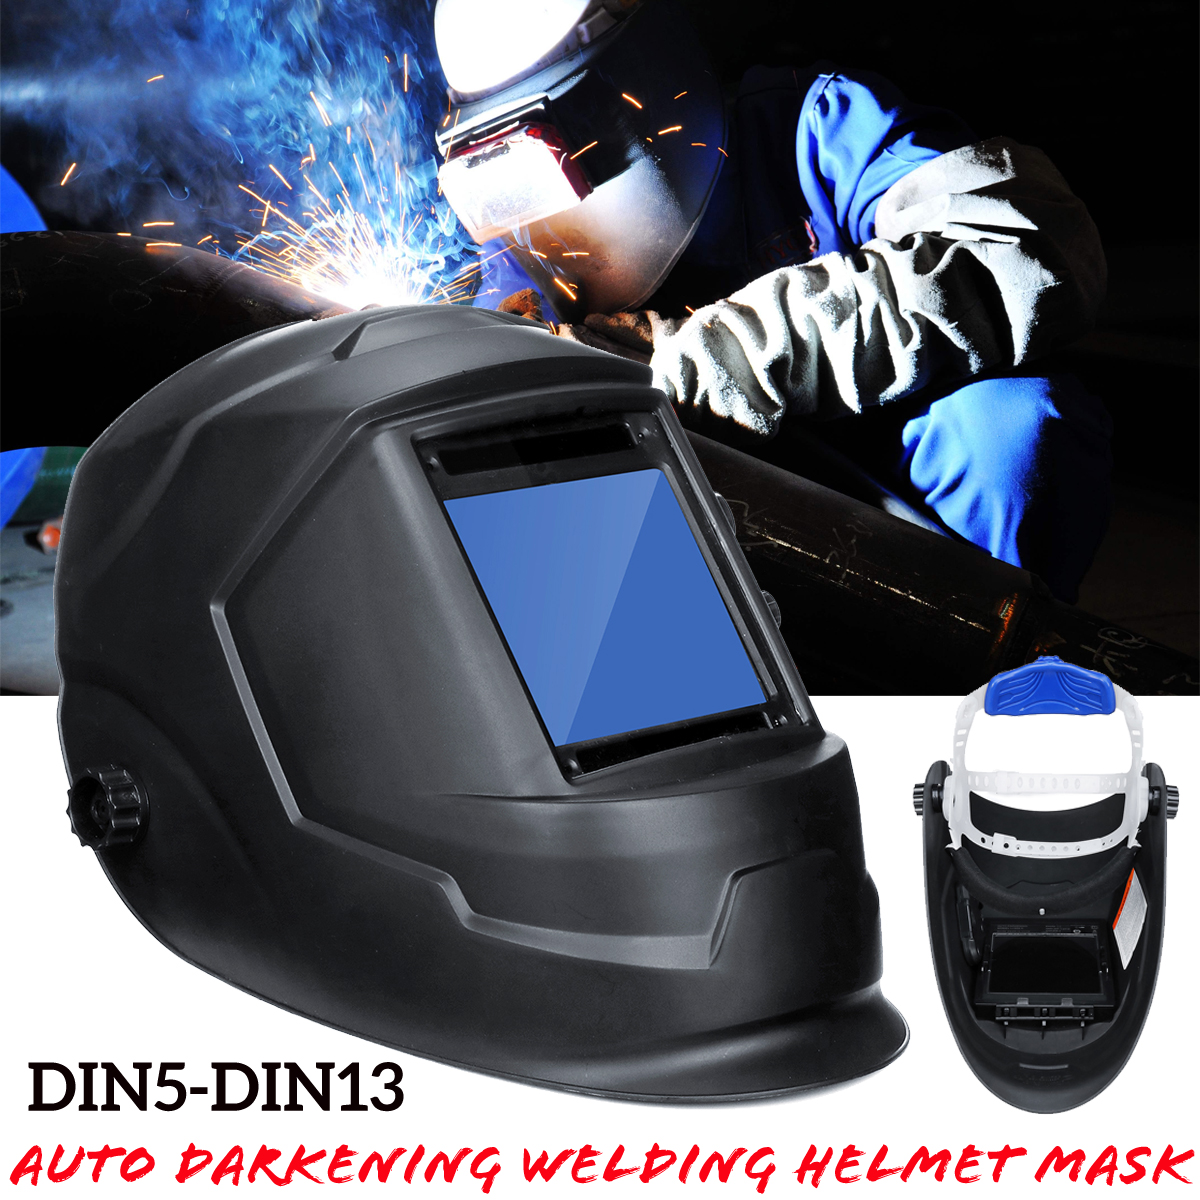 Solar-Energy-Automatic-Dimming-Welding-Mask-Auto-Darkening-Welding-Helmet-Big-View-Area-4-Sensors-Ex-1534647-2